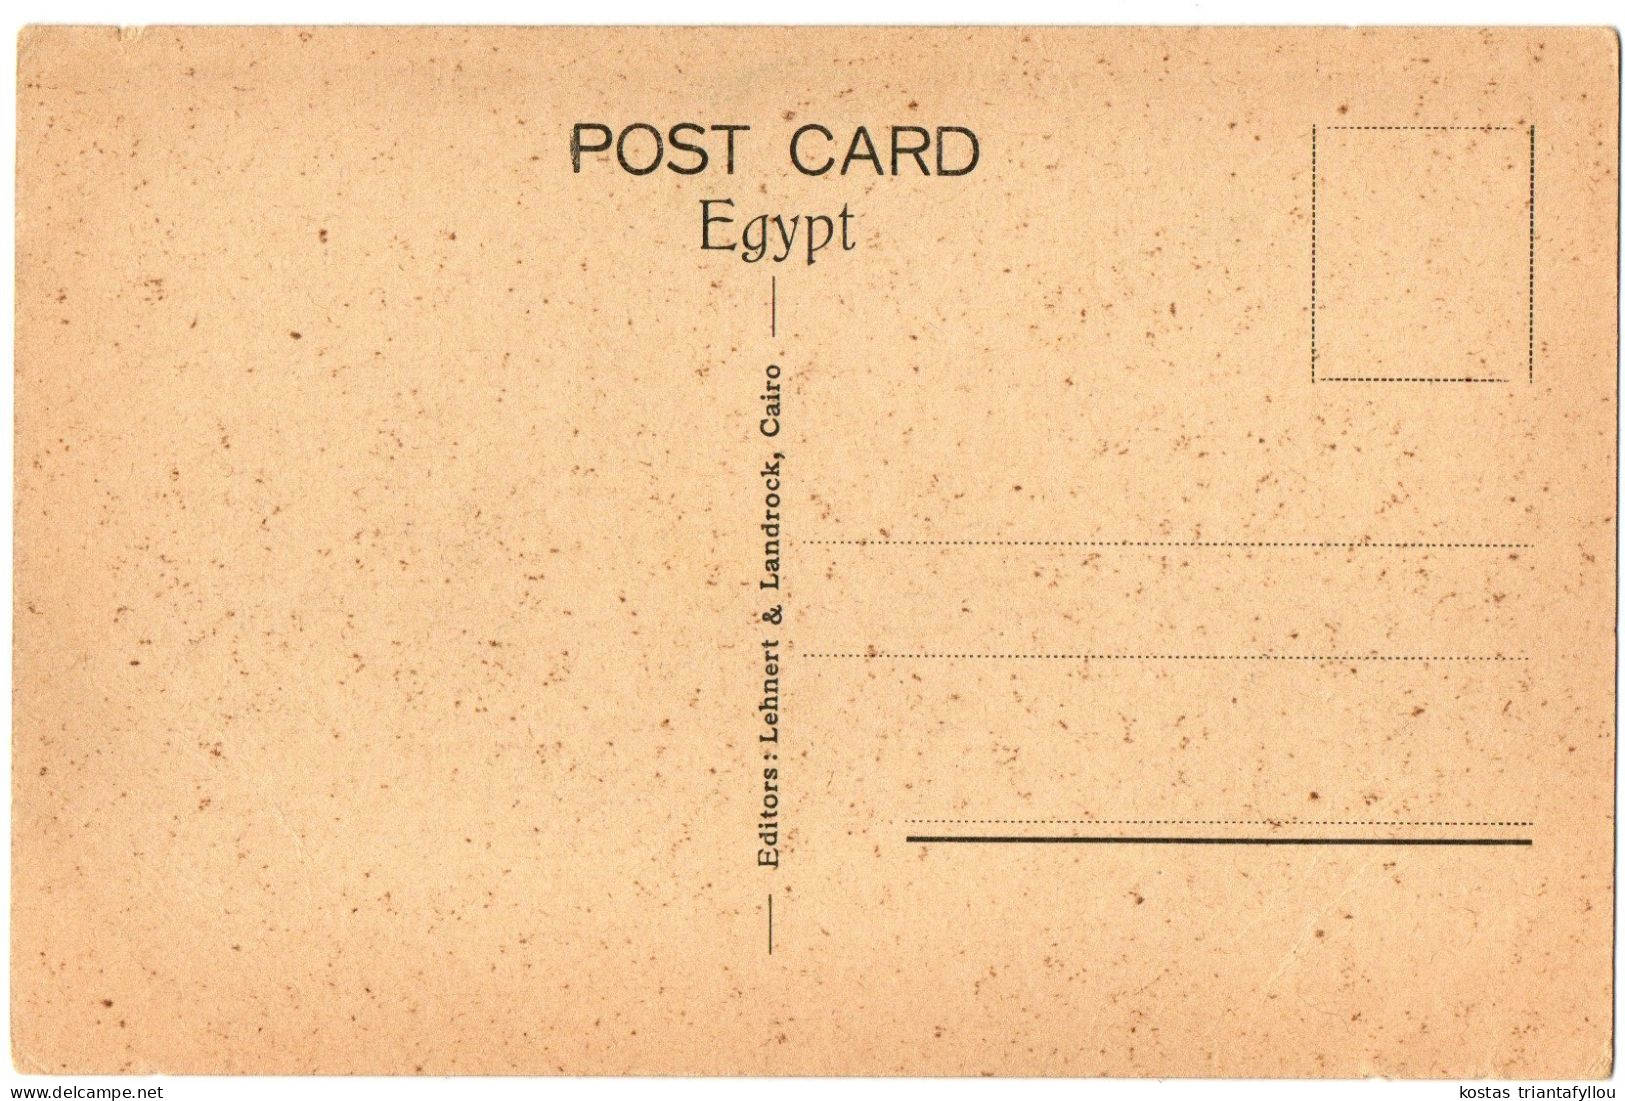 4.1.6 EGYPT, CAIRO, THE PARLIAMENT, POSTCARD - Cairo